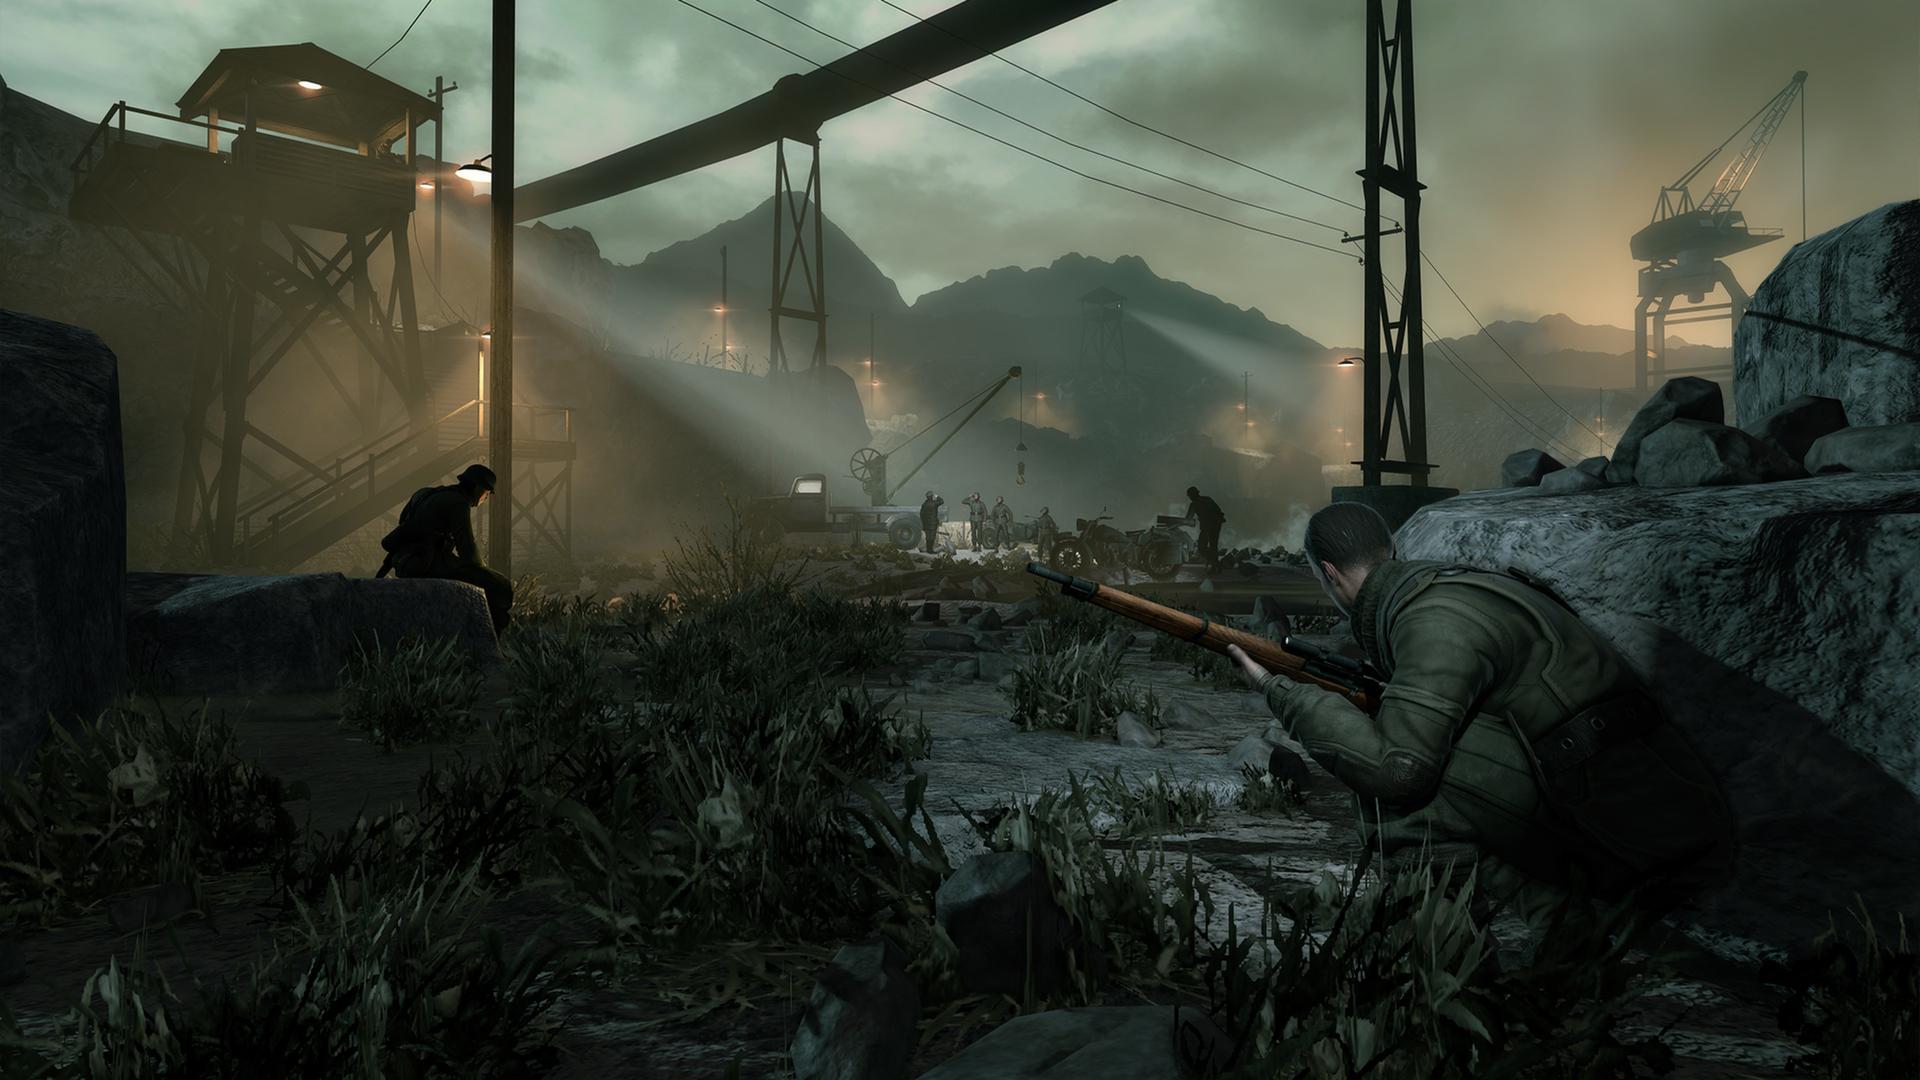 Screenshot №2 from game Sniper Elite V2